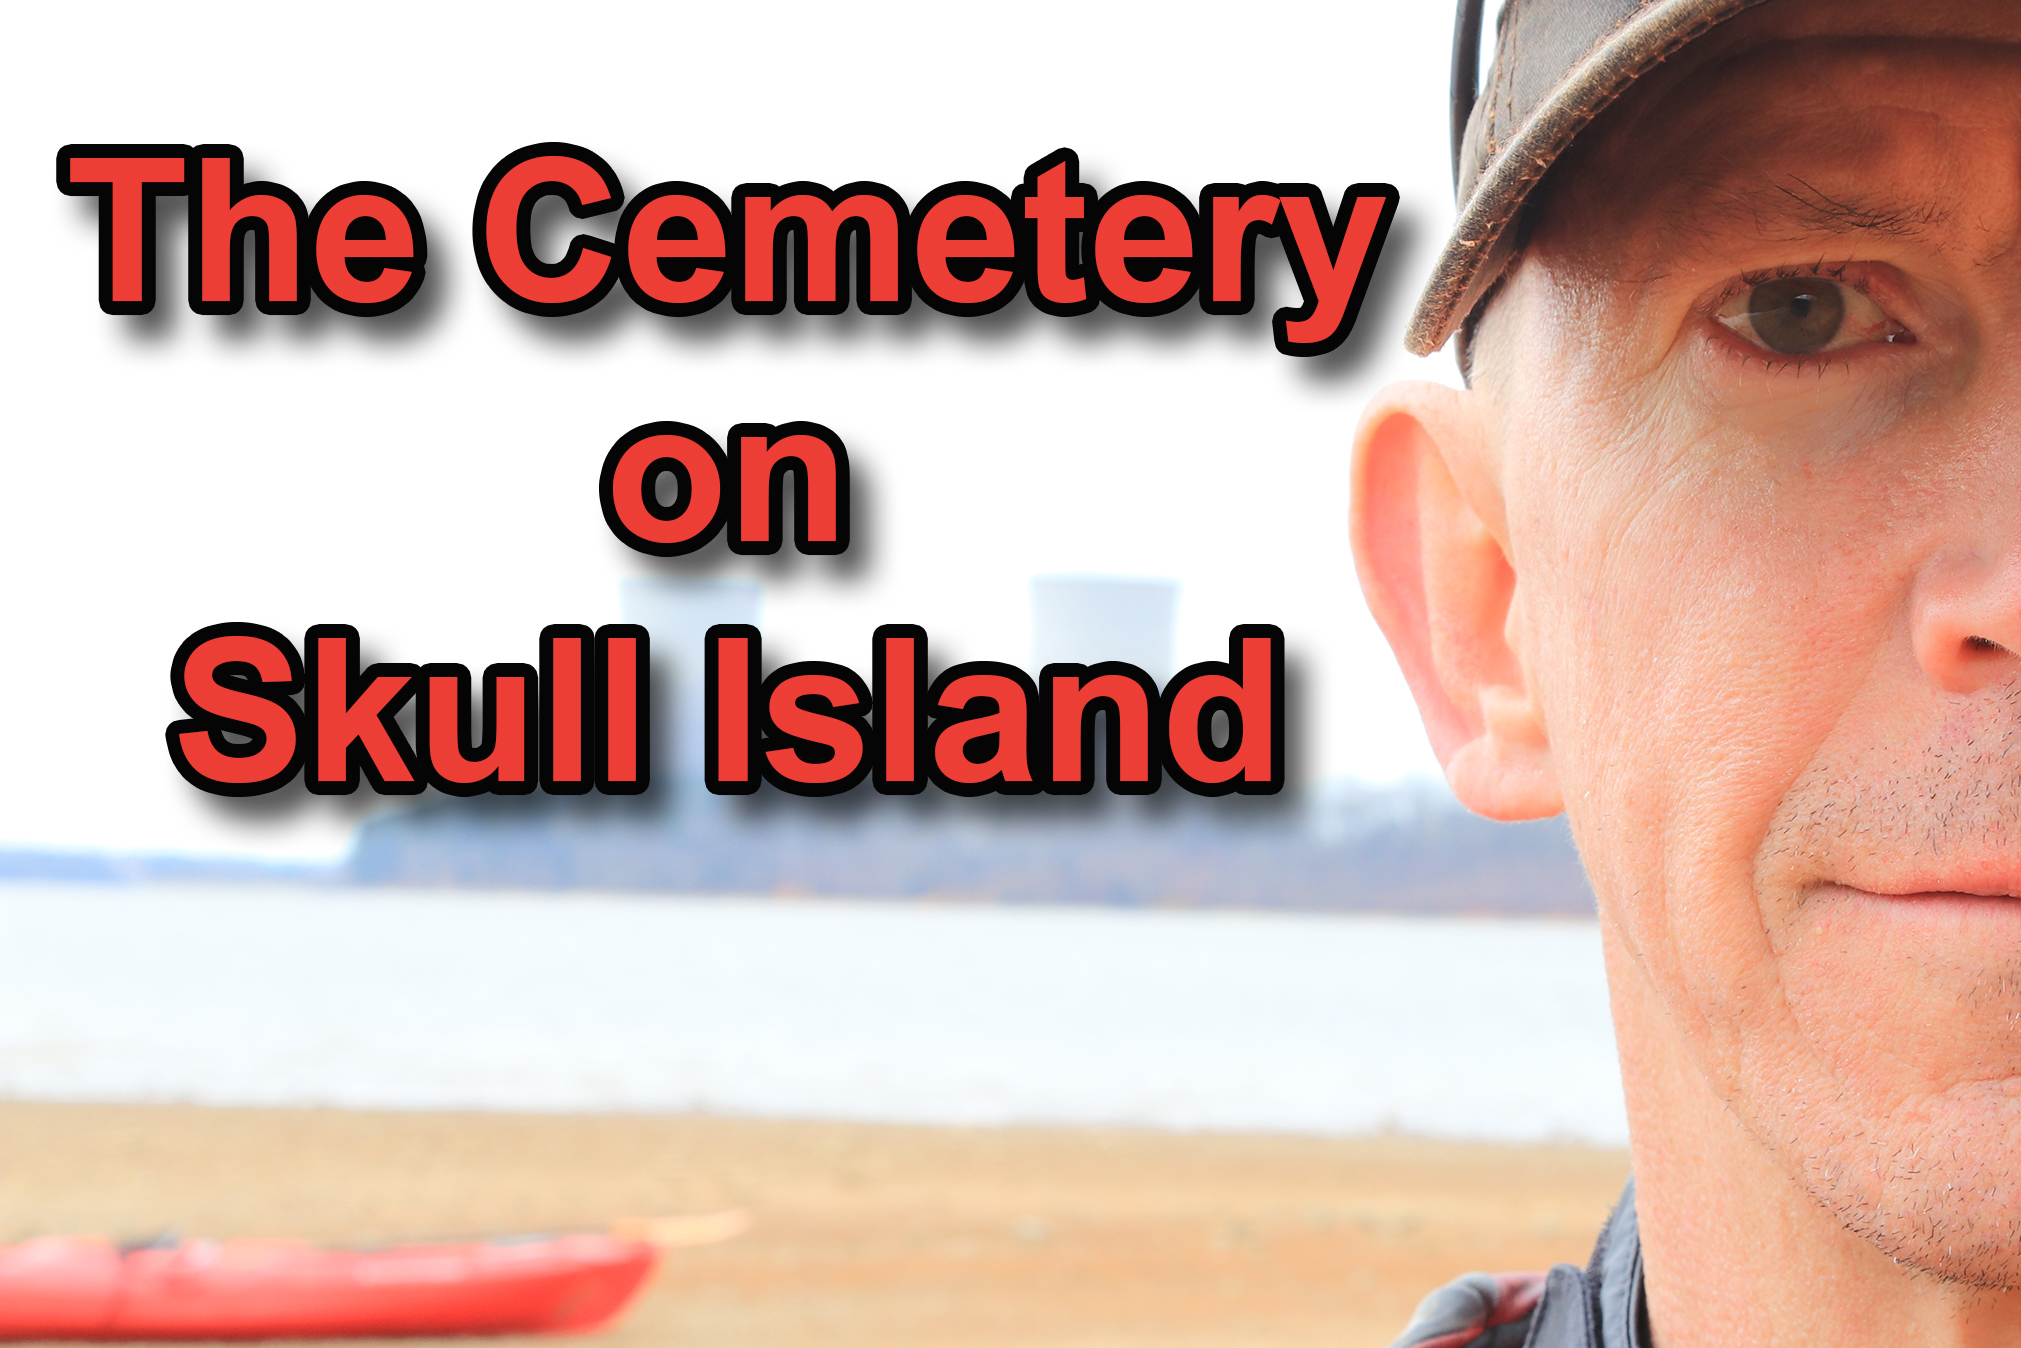 The Cemetery on Skull Island